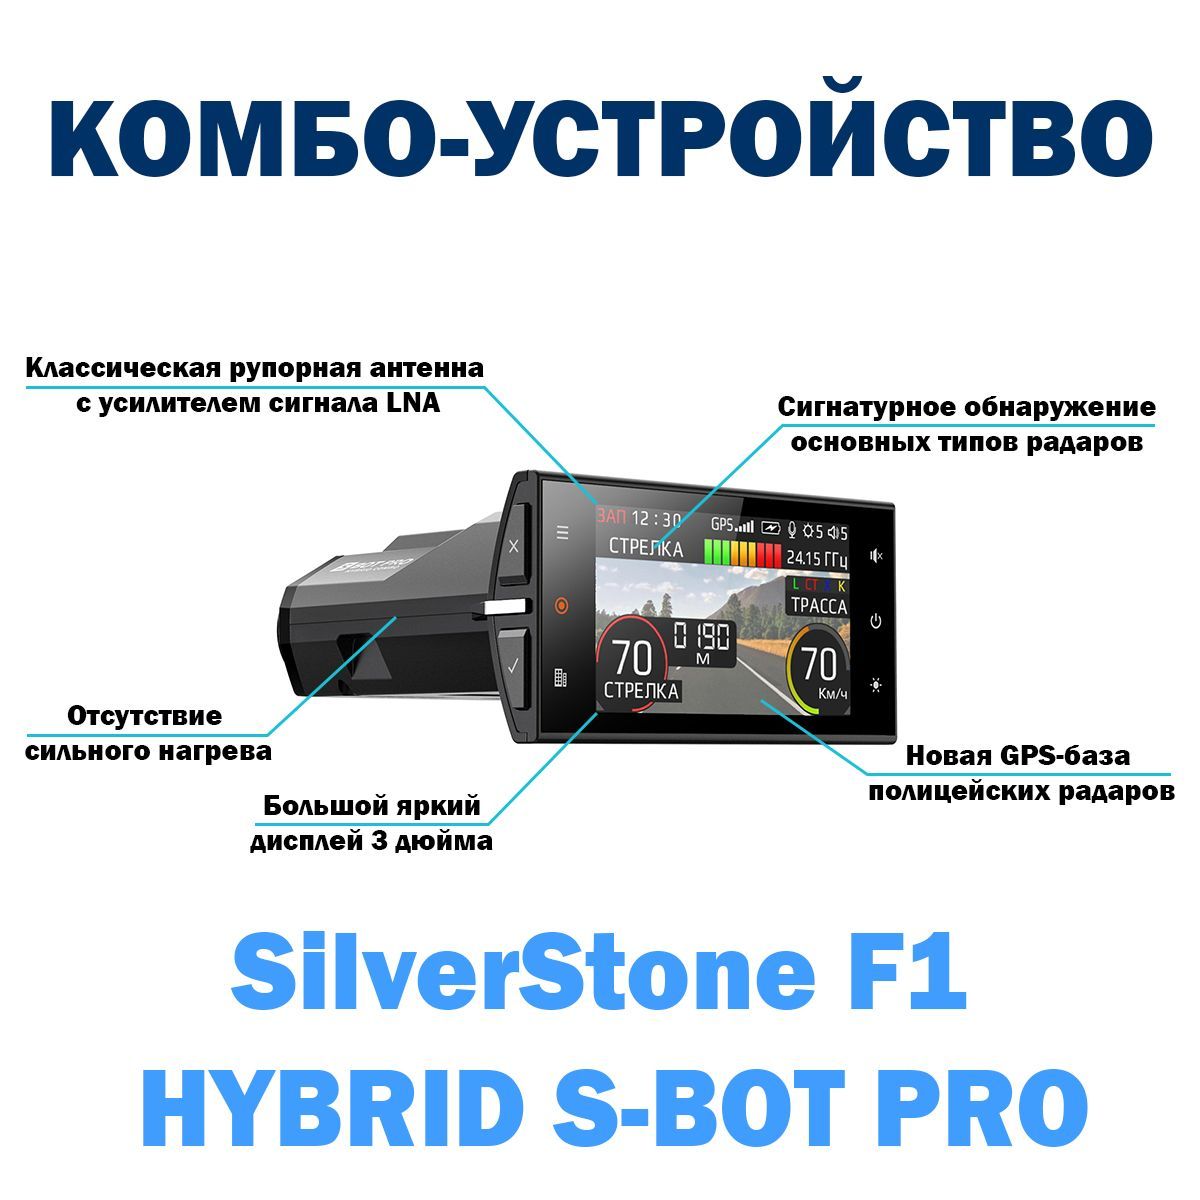 Silverstone f1 Hybrid s-bot Pro signatura. Комбо устройство Сильверстоун s бот про. Радар-детектор Silverstone f1s-bot Pro. Крепление для радар-детектора Silverstone f1 sbot Pro.